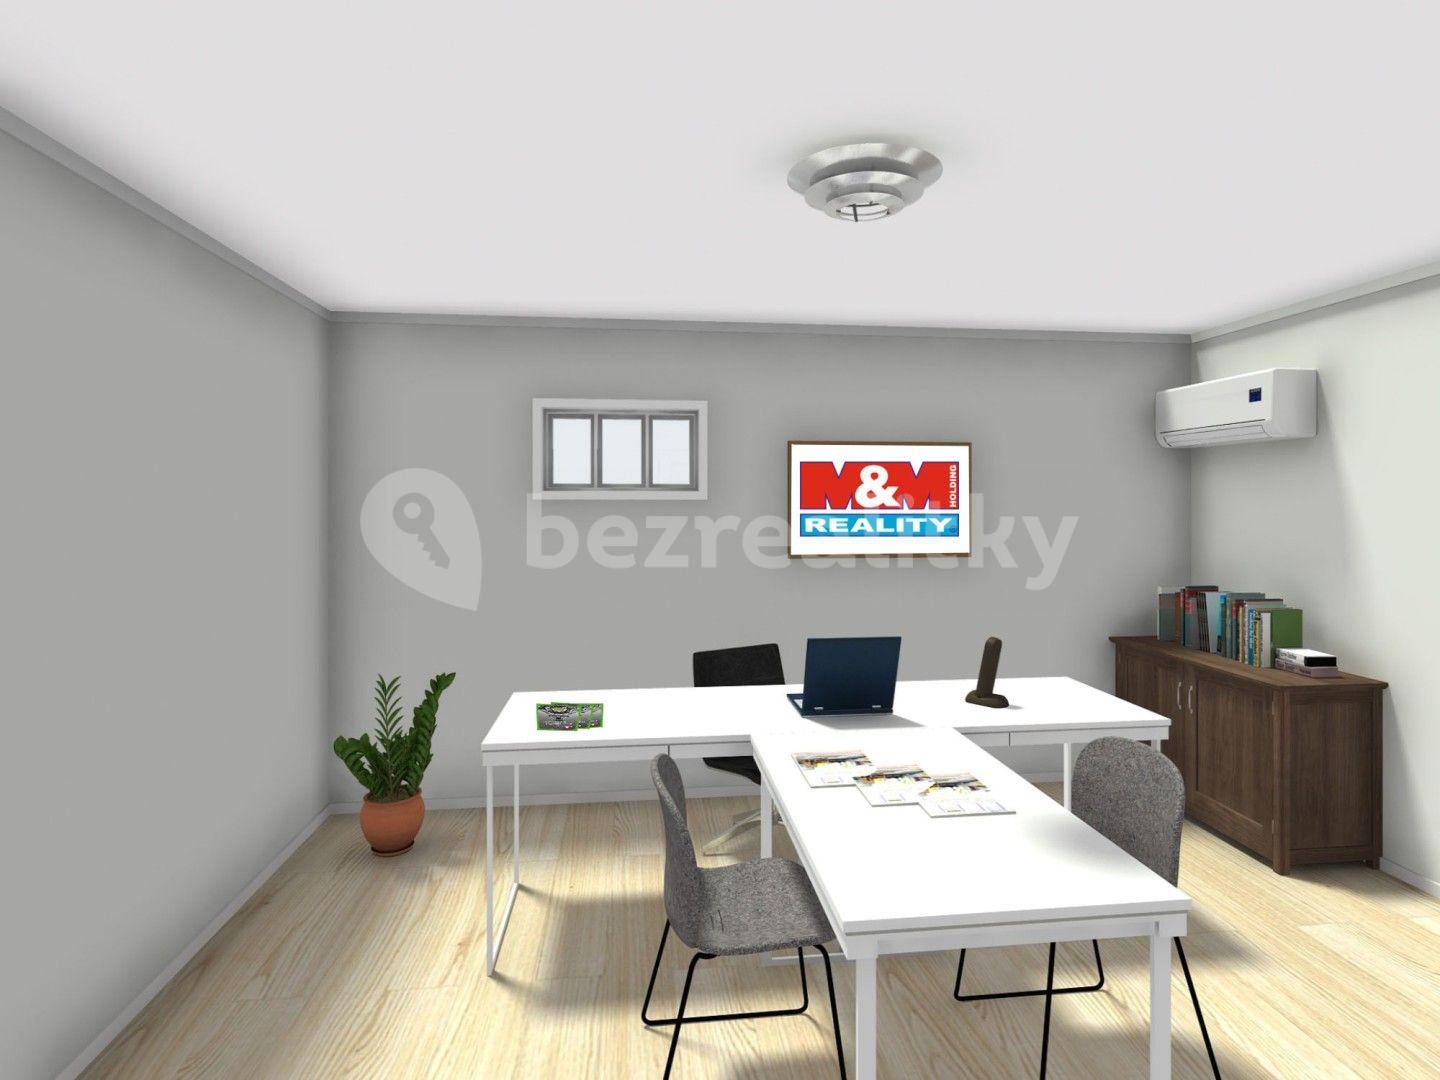 1 bedroom flat for sale, 50 m², Obránců míru, Kadaň, Ústecký Region